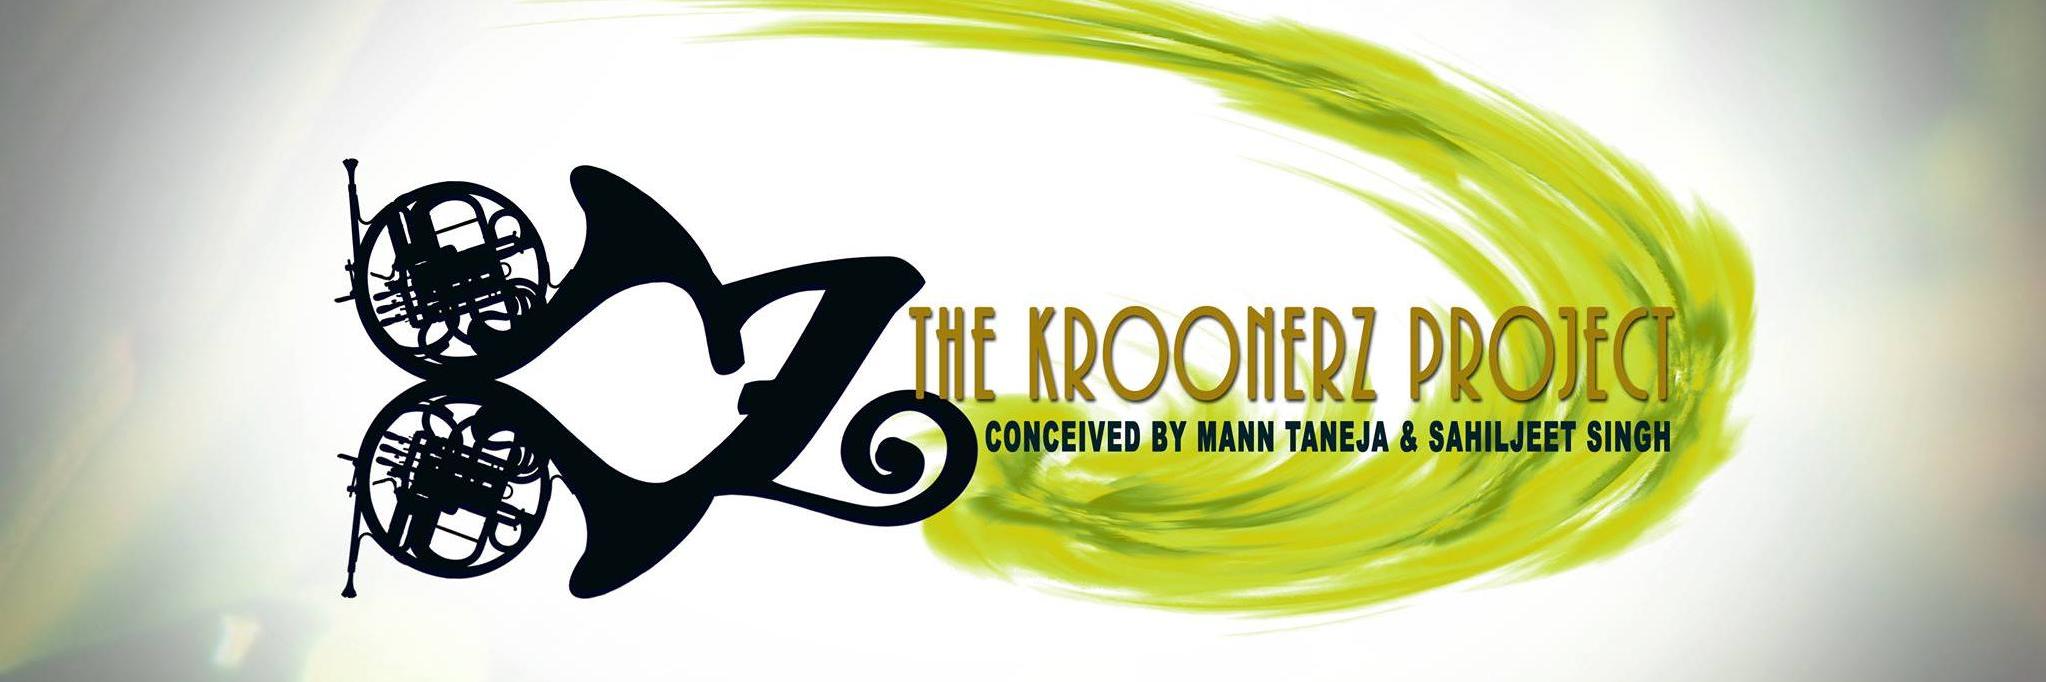 The Kroonerz Project